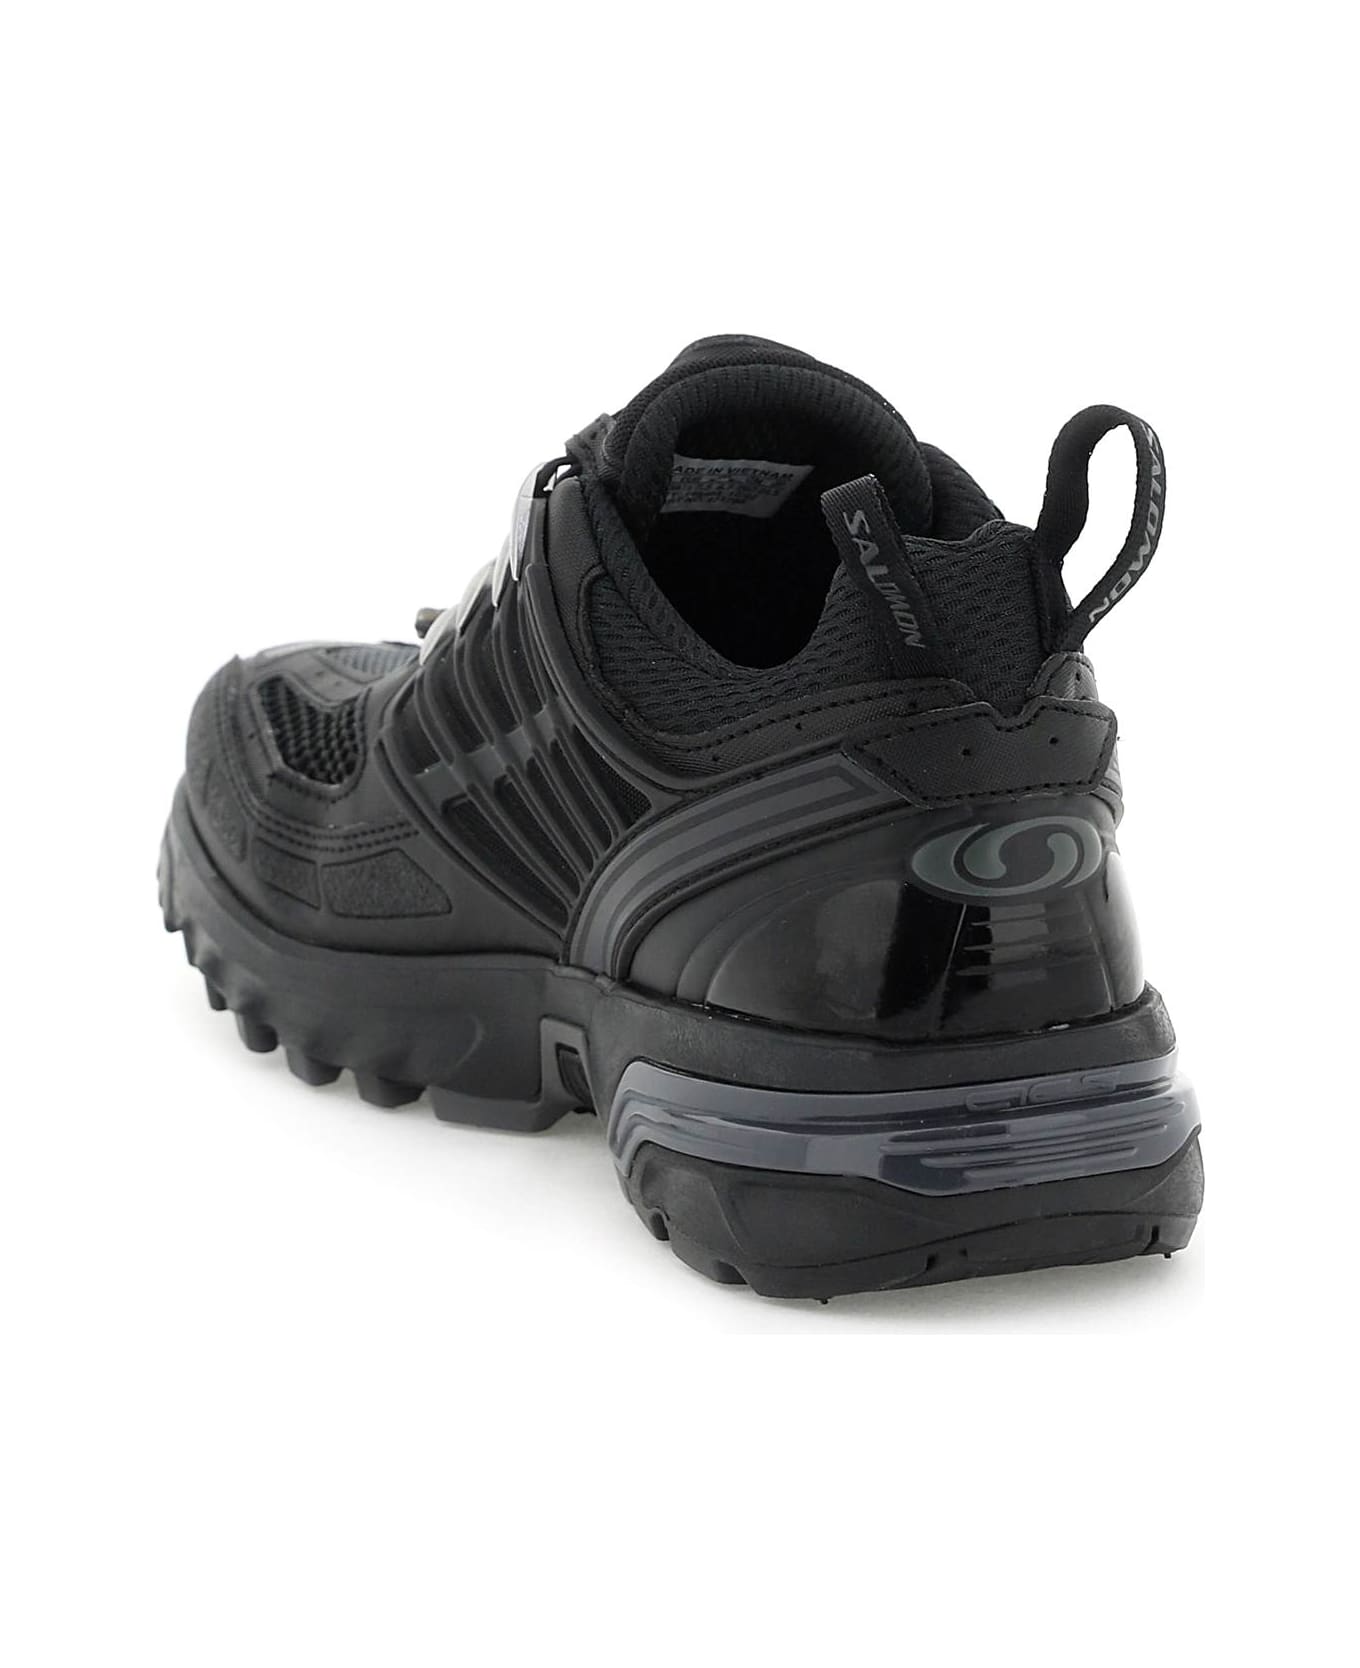 Salomon Acs Pro Sneakers - BLACK BLACK BLACK (Black) スニーカー